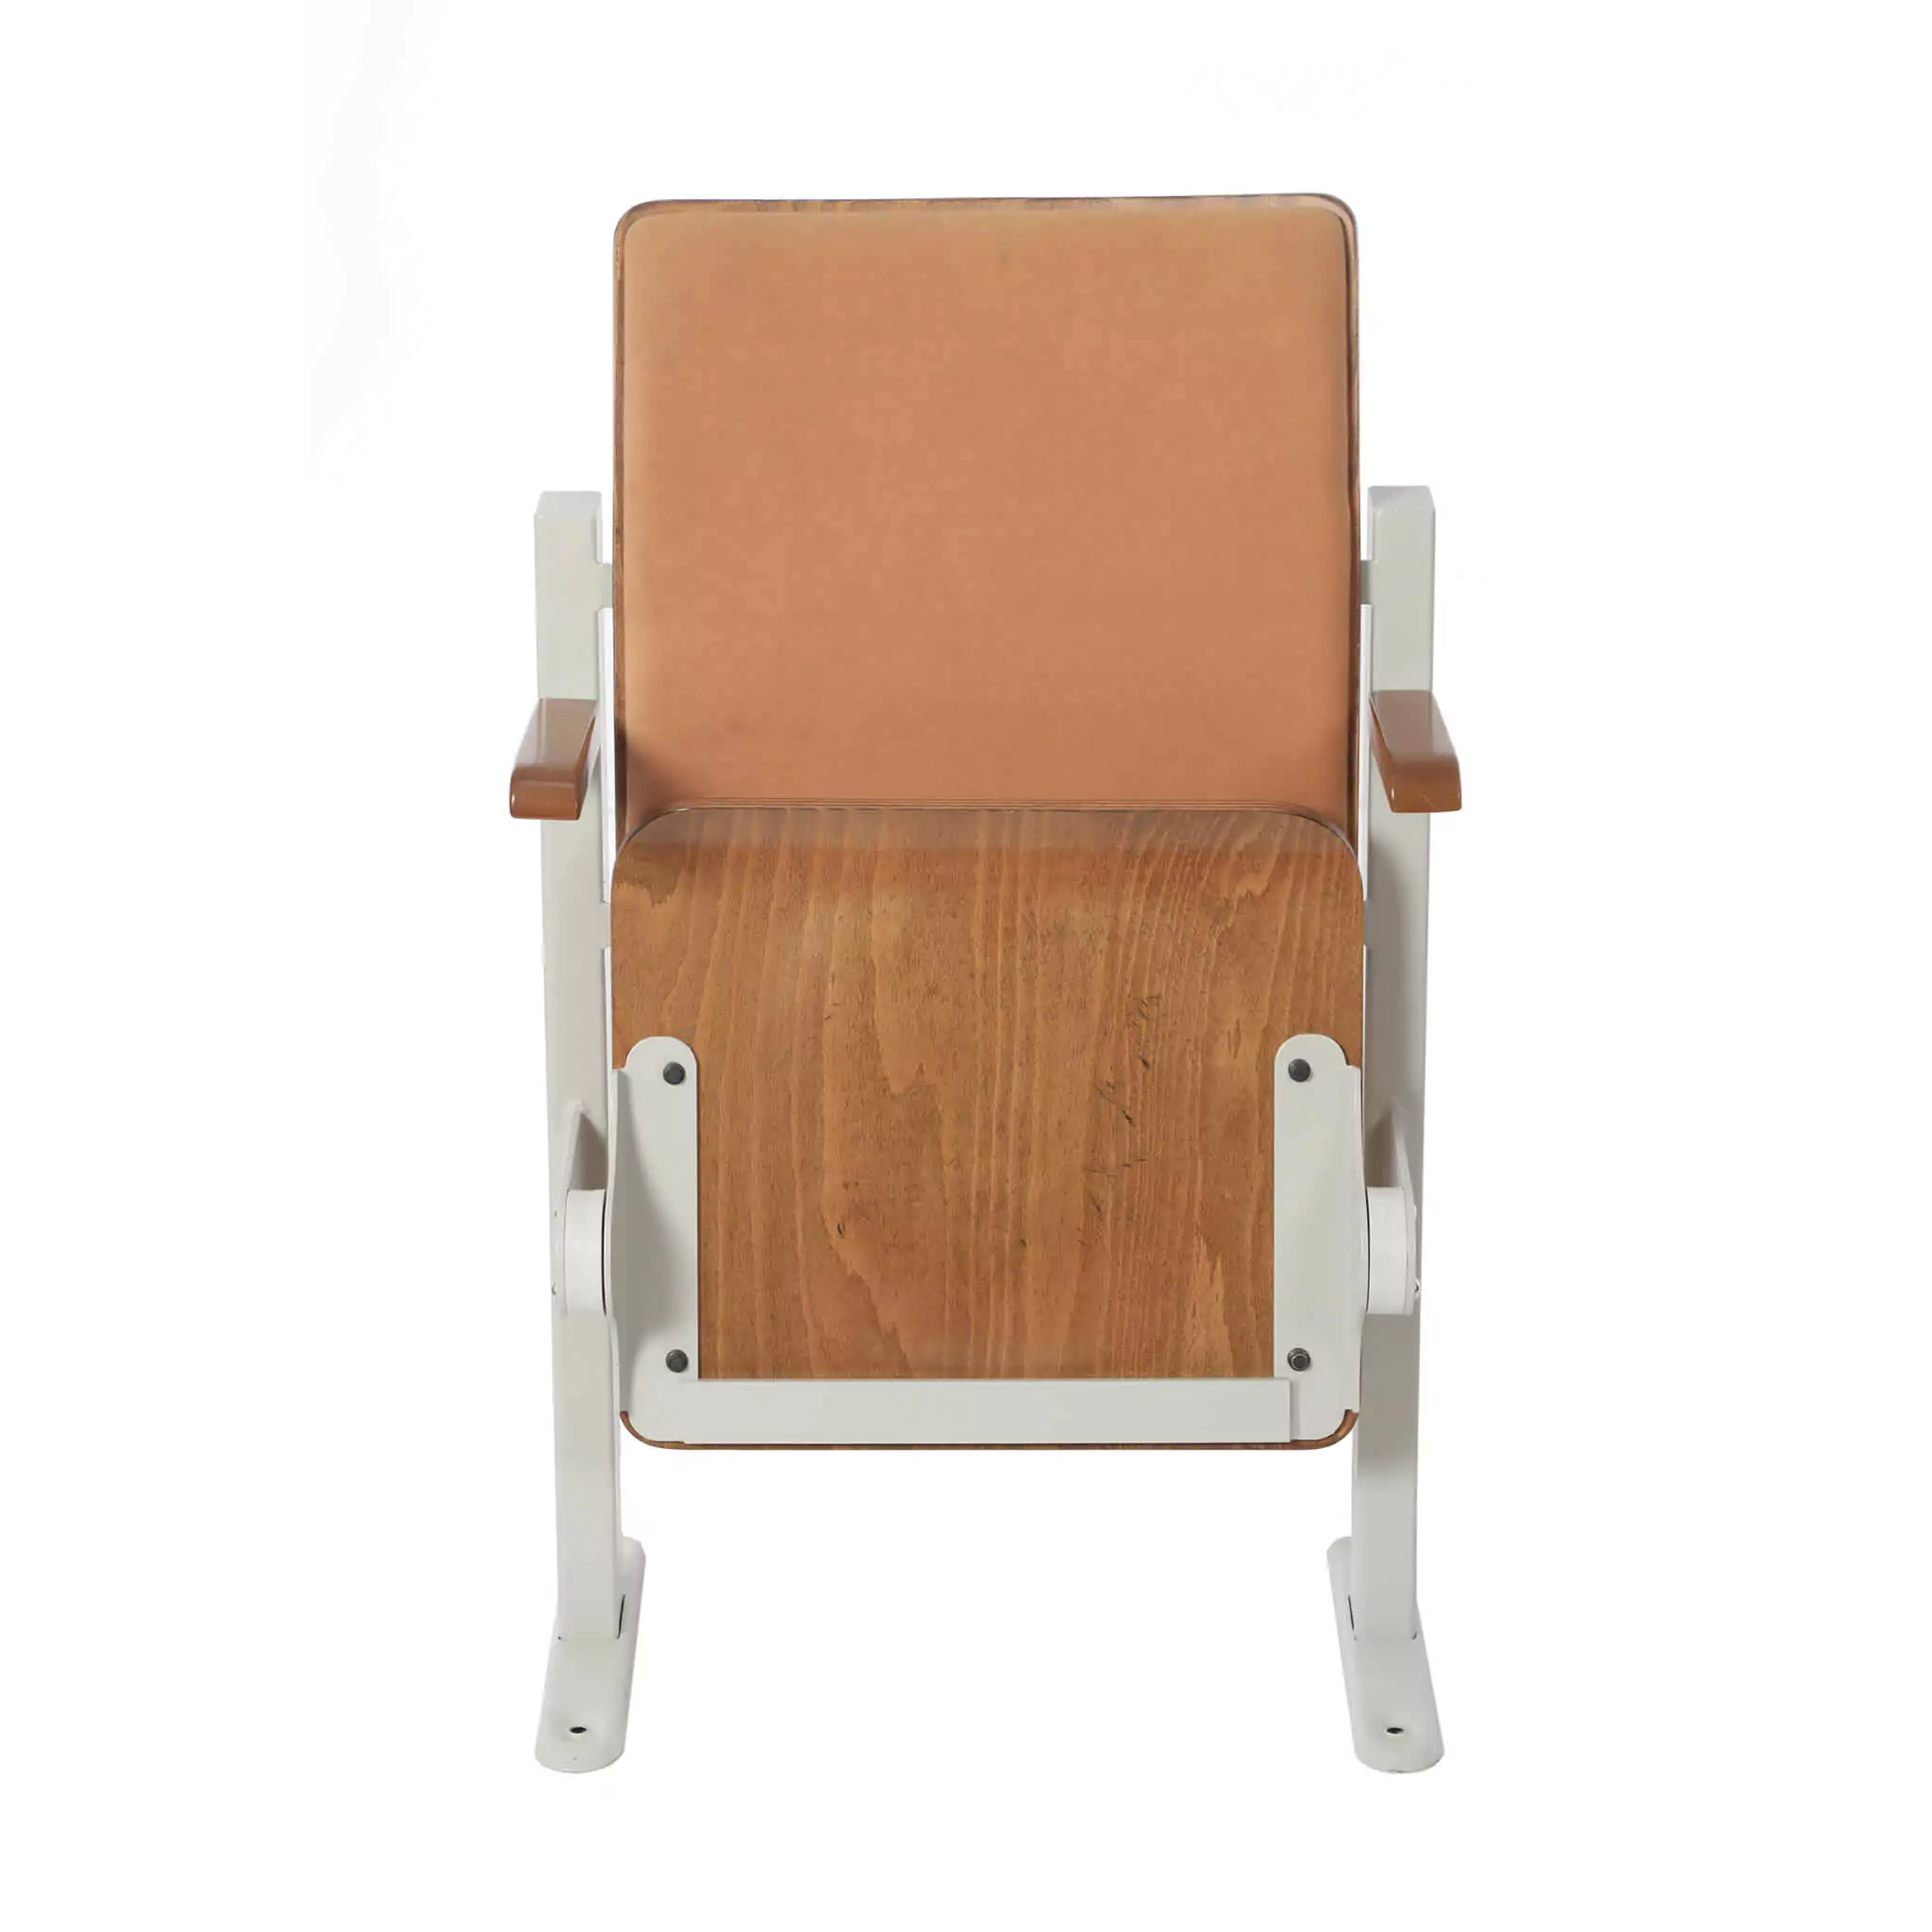 Simko Seating Products School Chair Morganite